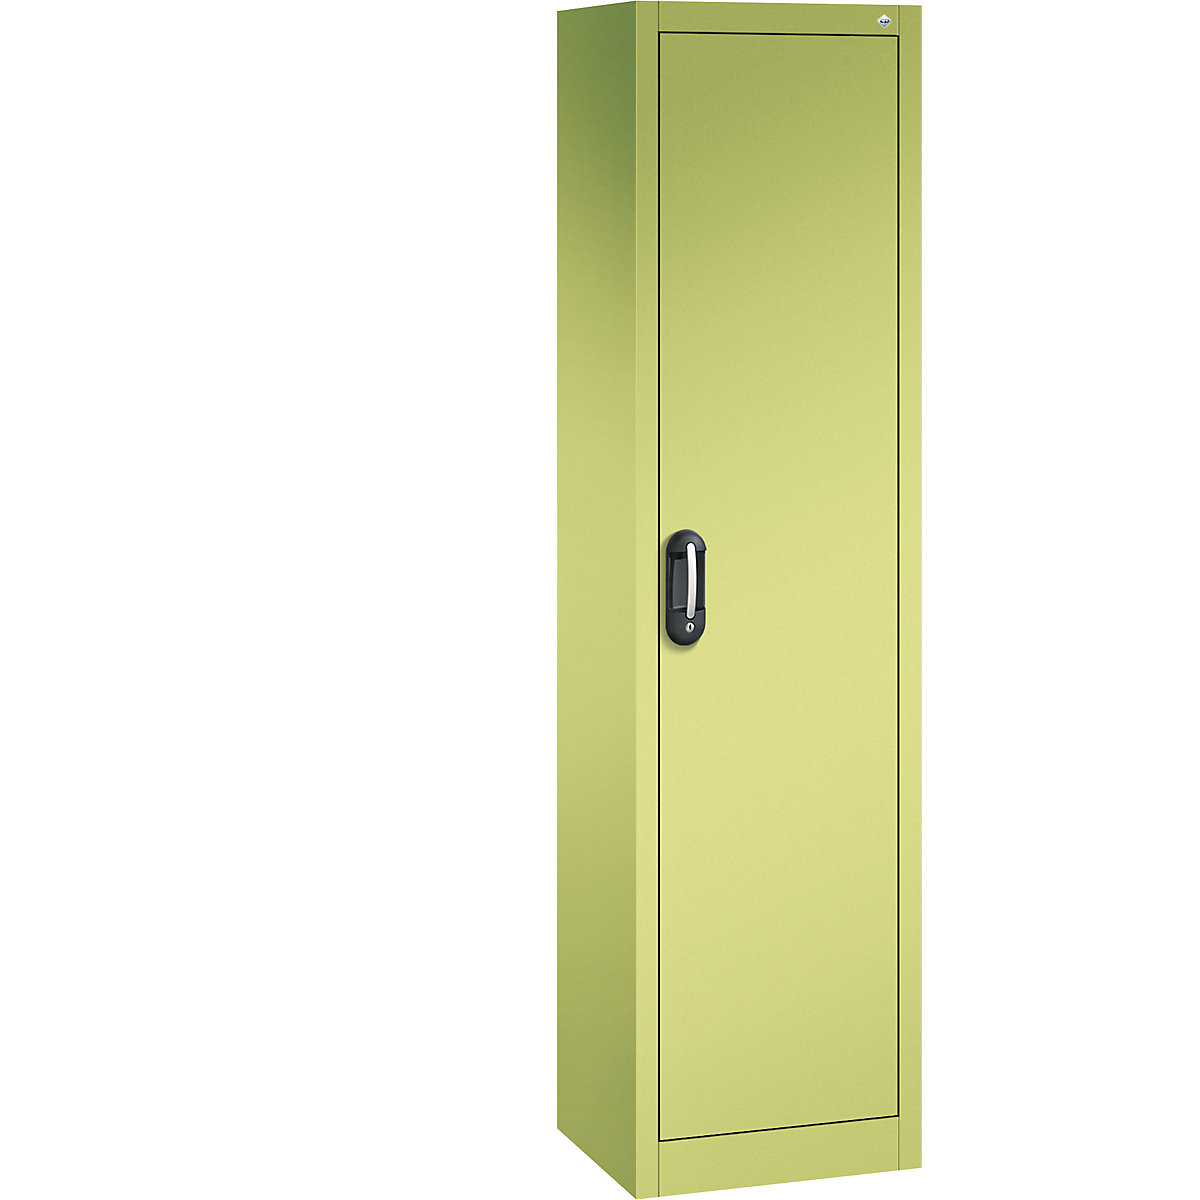 ACURADO universal cupboard – C+P, WxD 500 x 400 mm, viridian green / viridian green-16